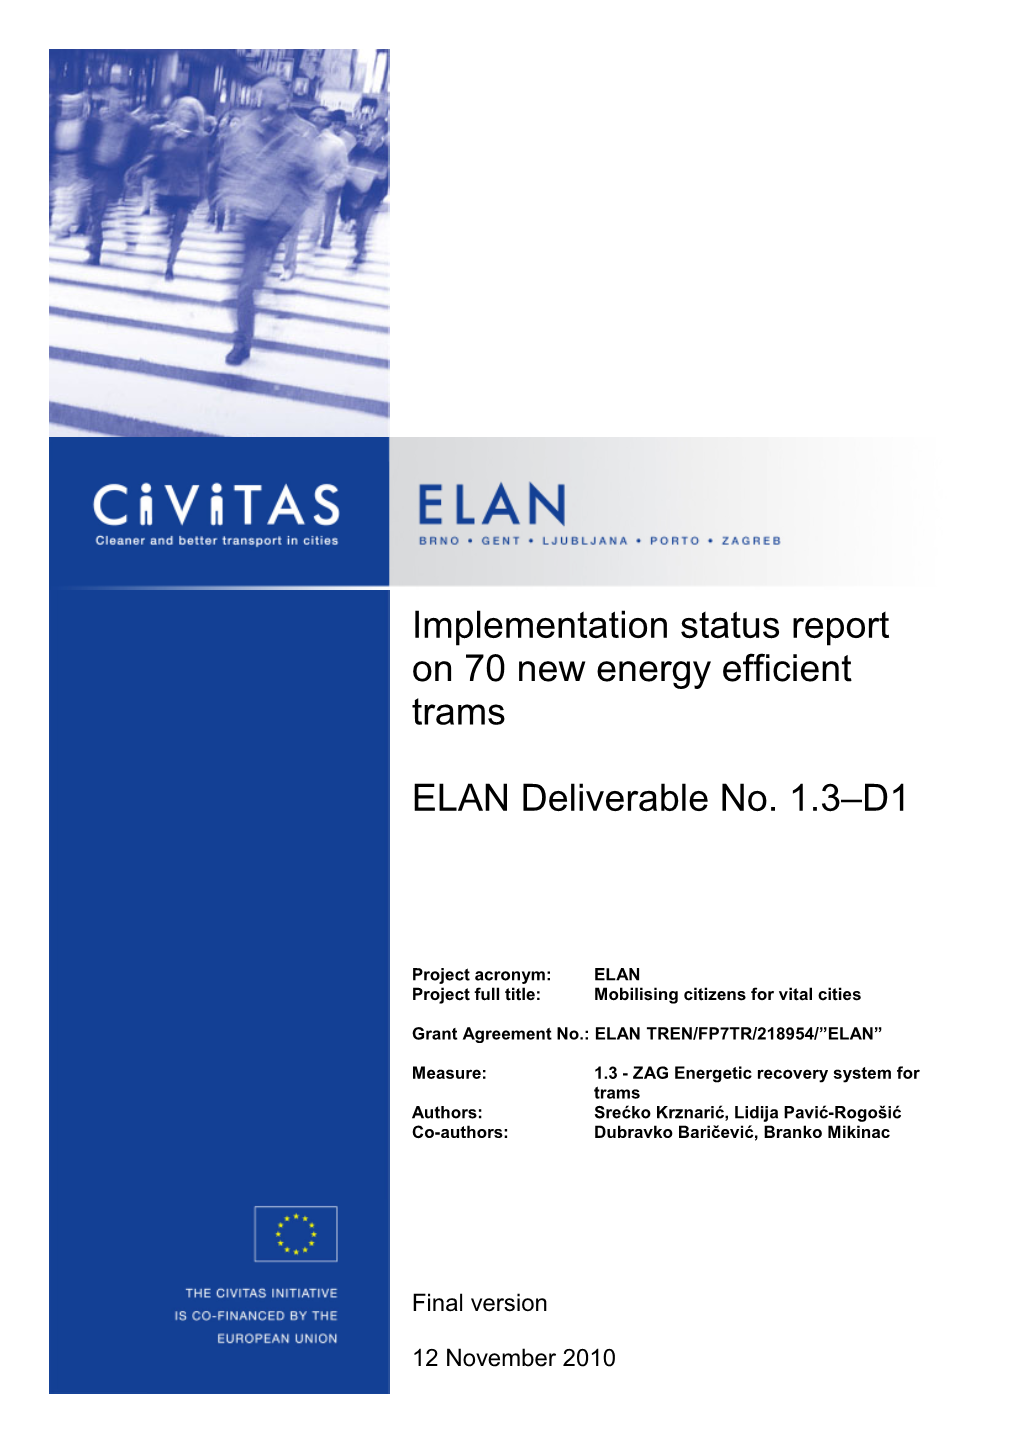 CIVITAS-ELAN Working Document Template